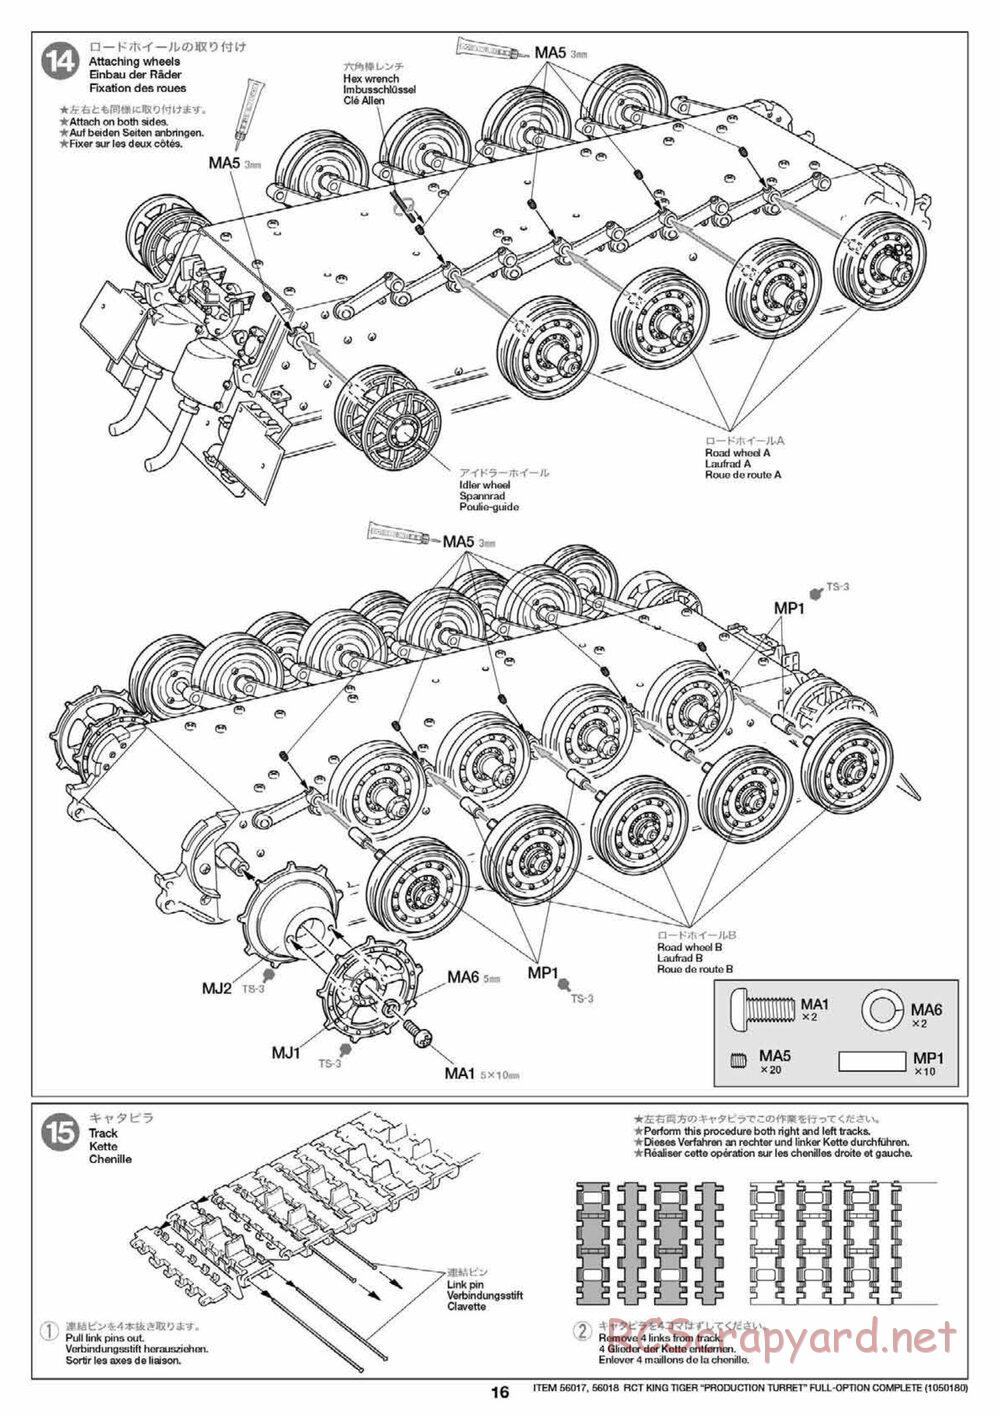 Tamiya - King Tiger - 1/16 Scale Chassis - Manual - Page 16